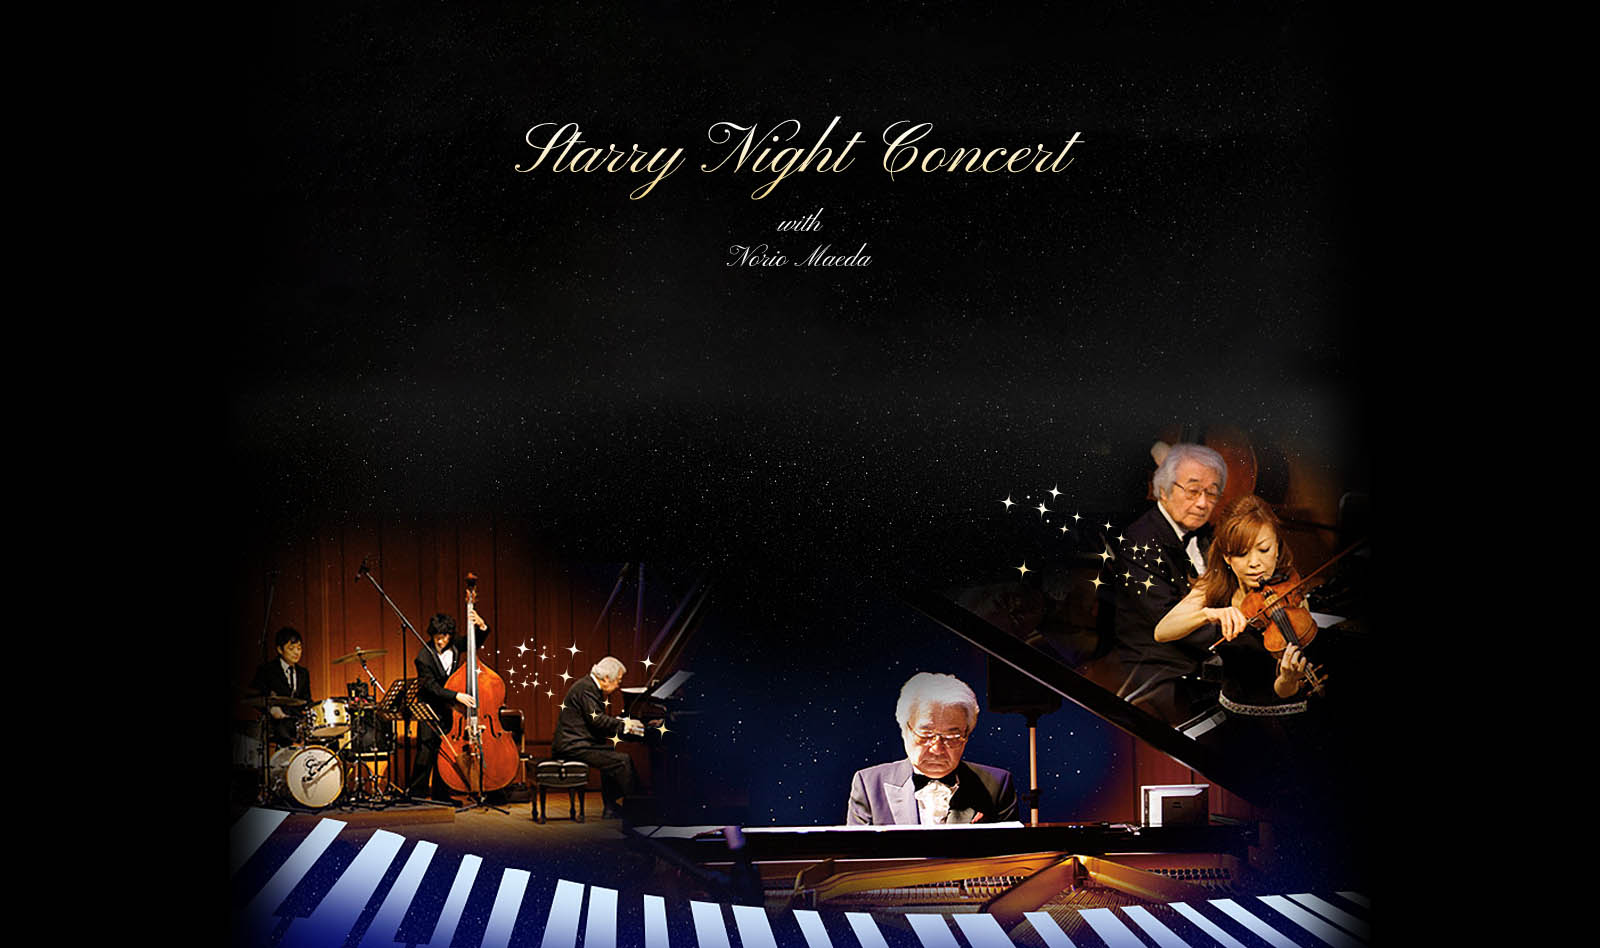 Starry Night Concert with Norio Maeda